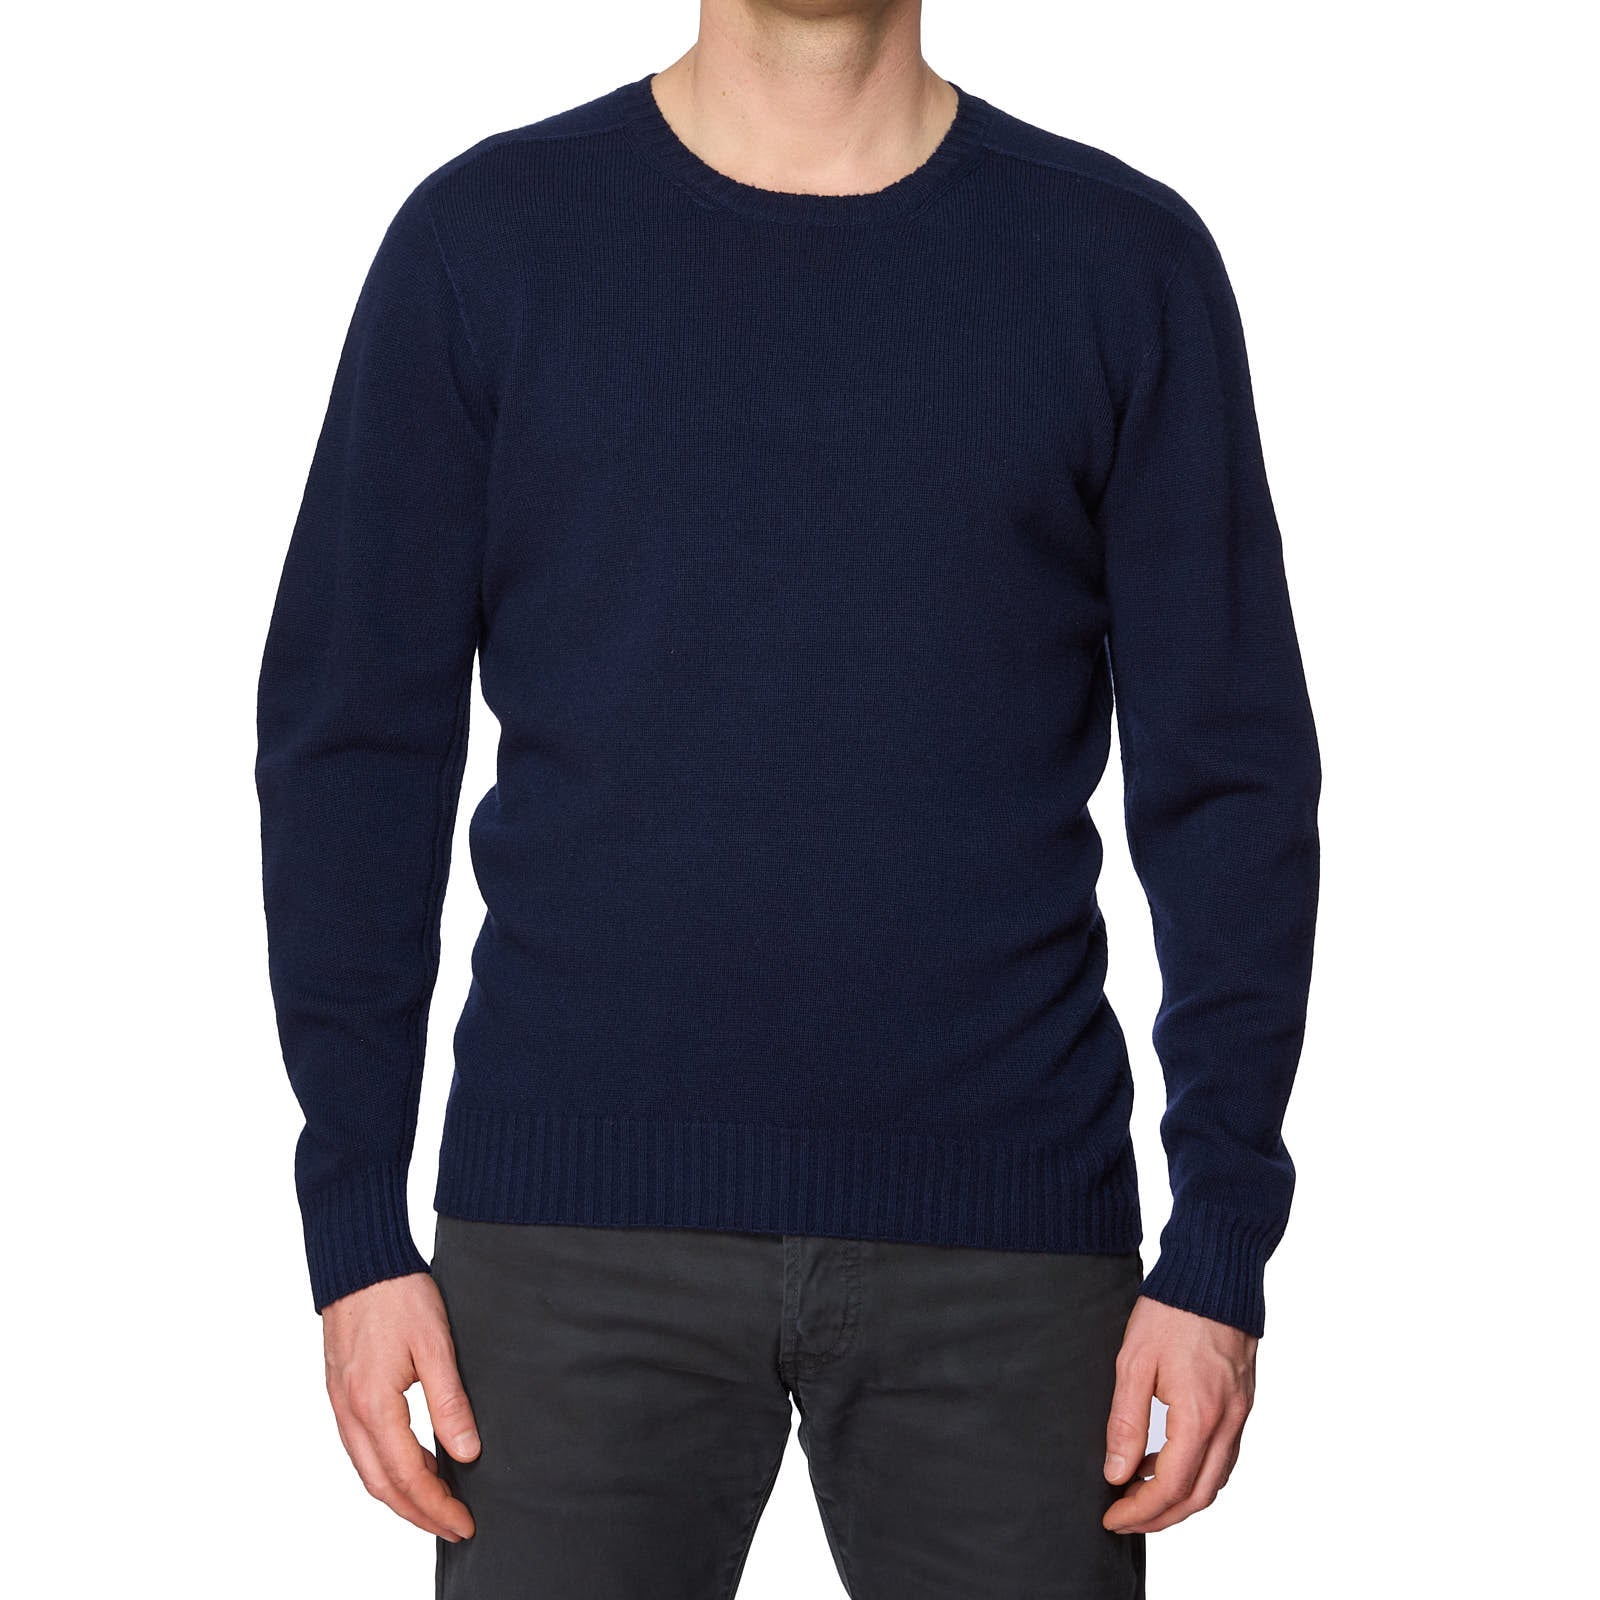 VANNUCCI Milano Blue Wool-Cashmere Knit Crewneck Sweater EU 48 NEW US S